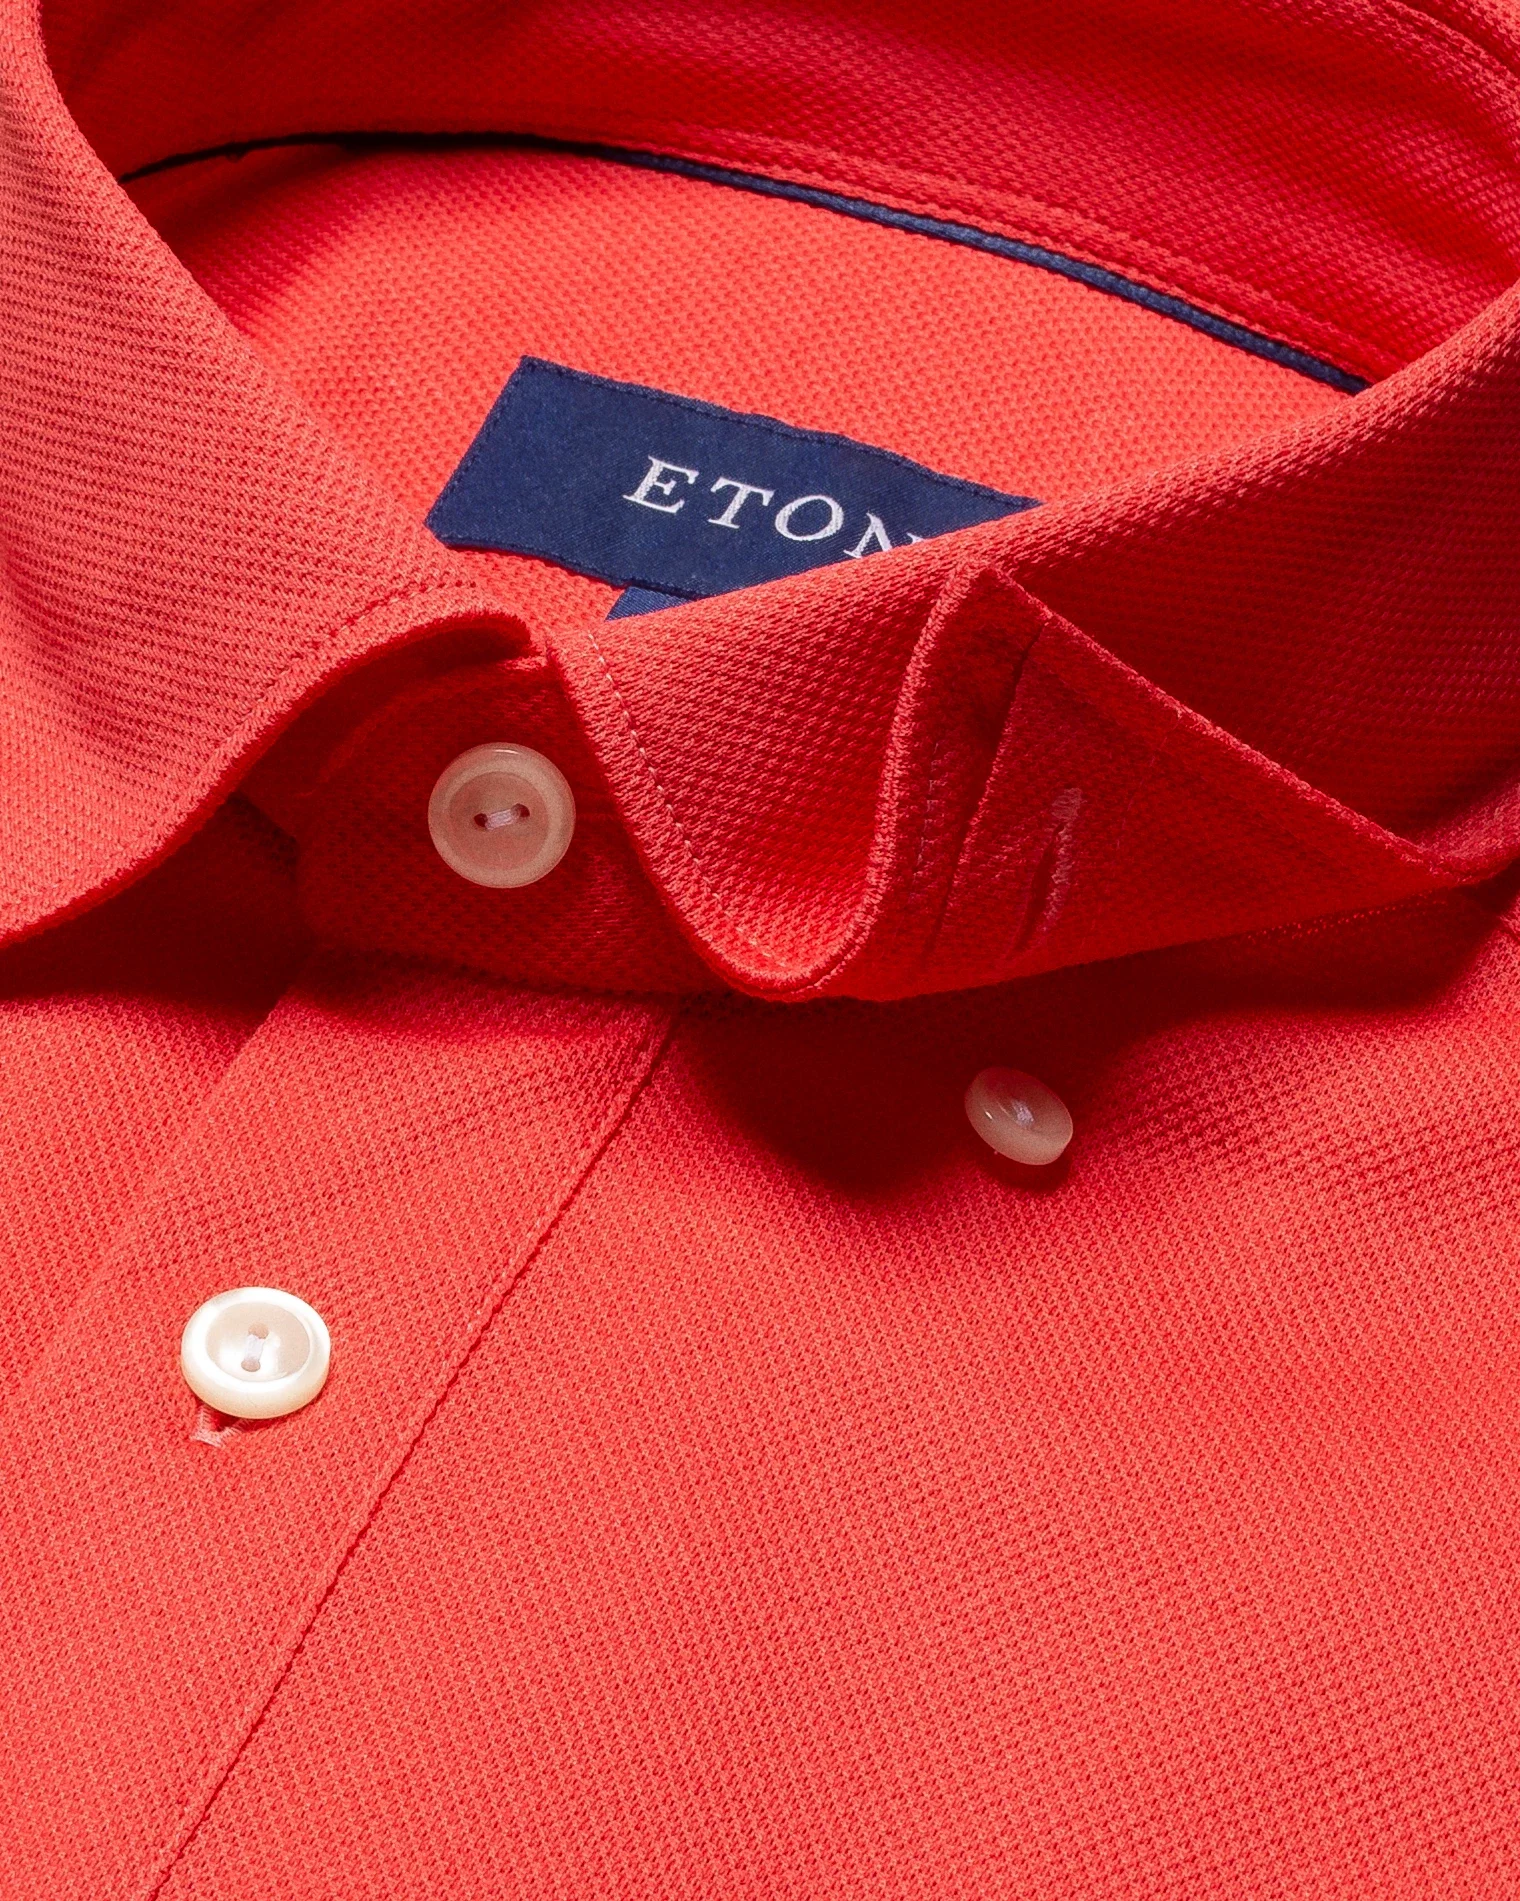 Eton - coral polo shirt long sleeved